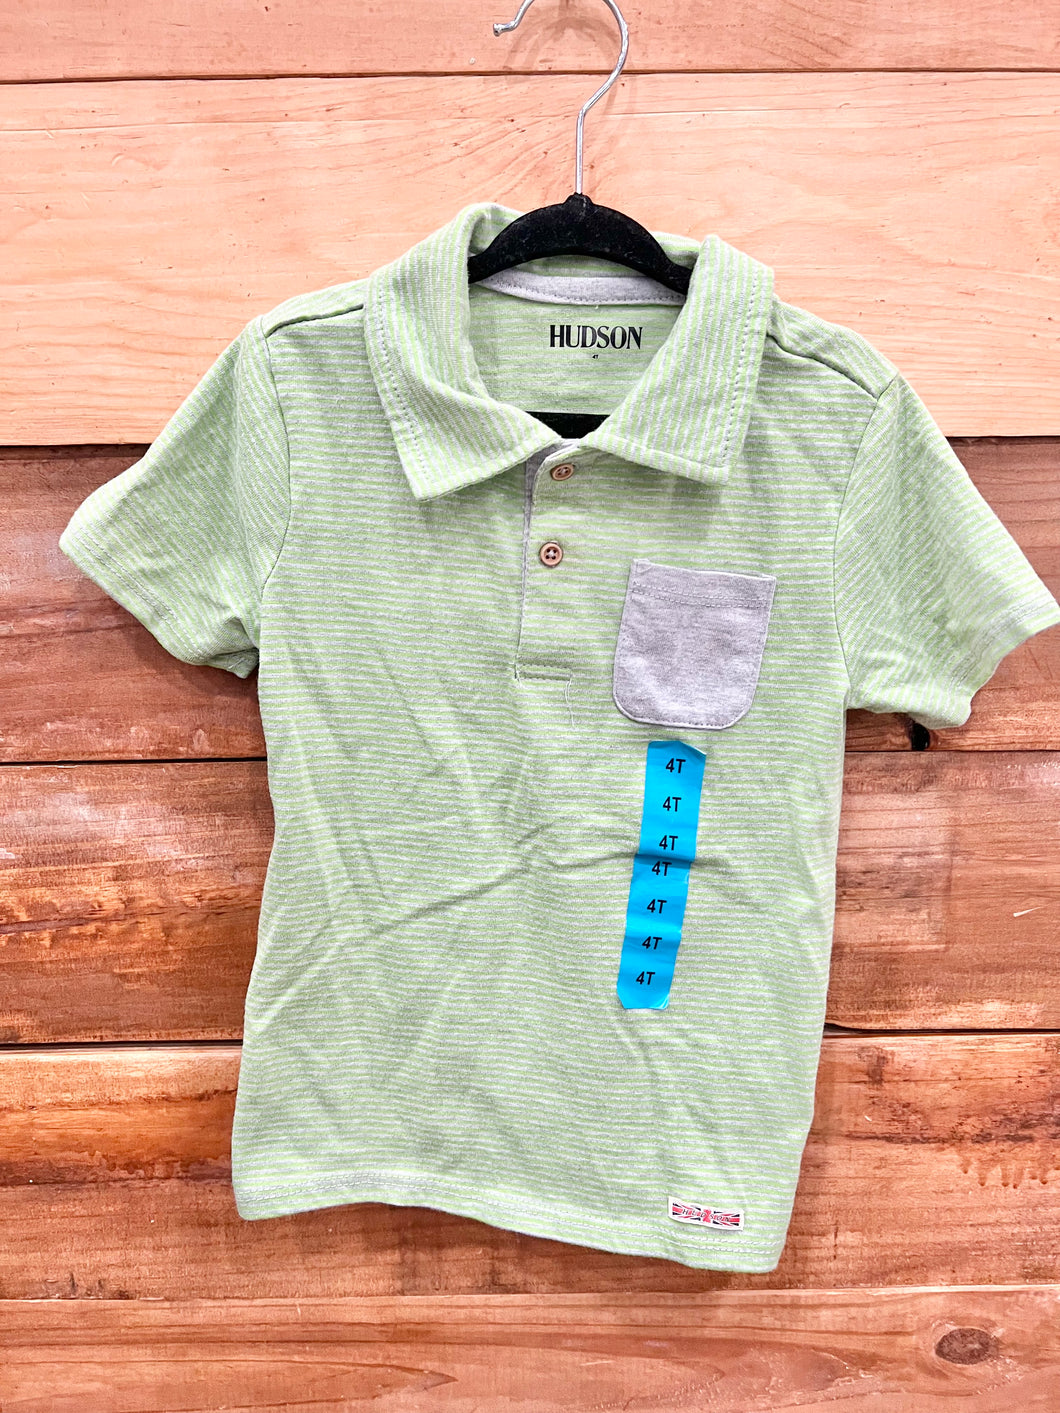 Hudson Green Shirt Size 4T